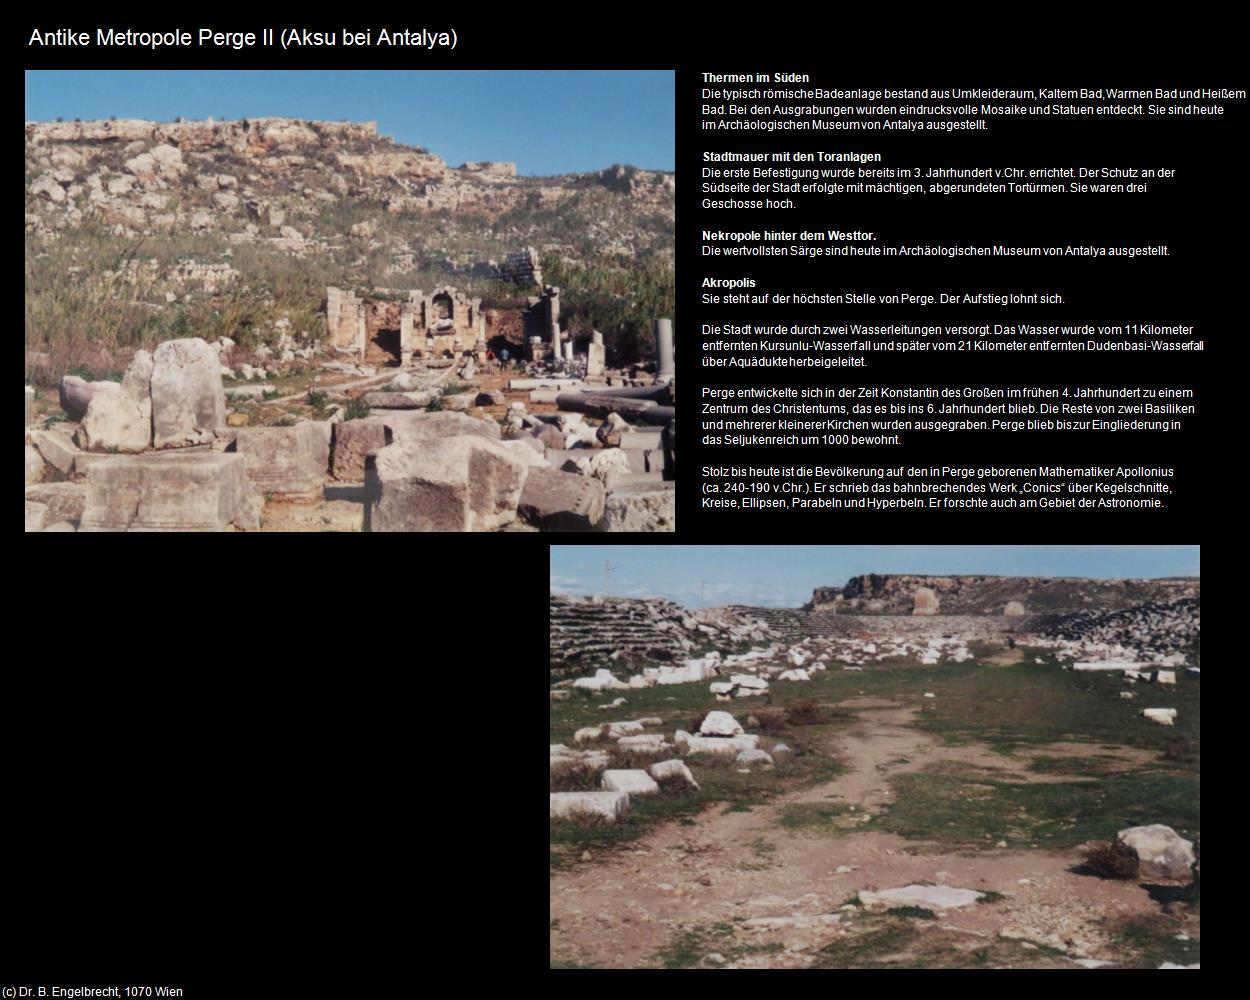 Antike Metropole Perge II (Aksu) (Antalya) in TÜRKEI